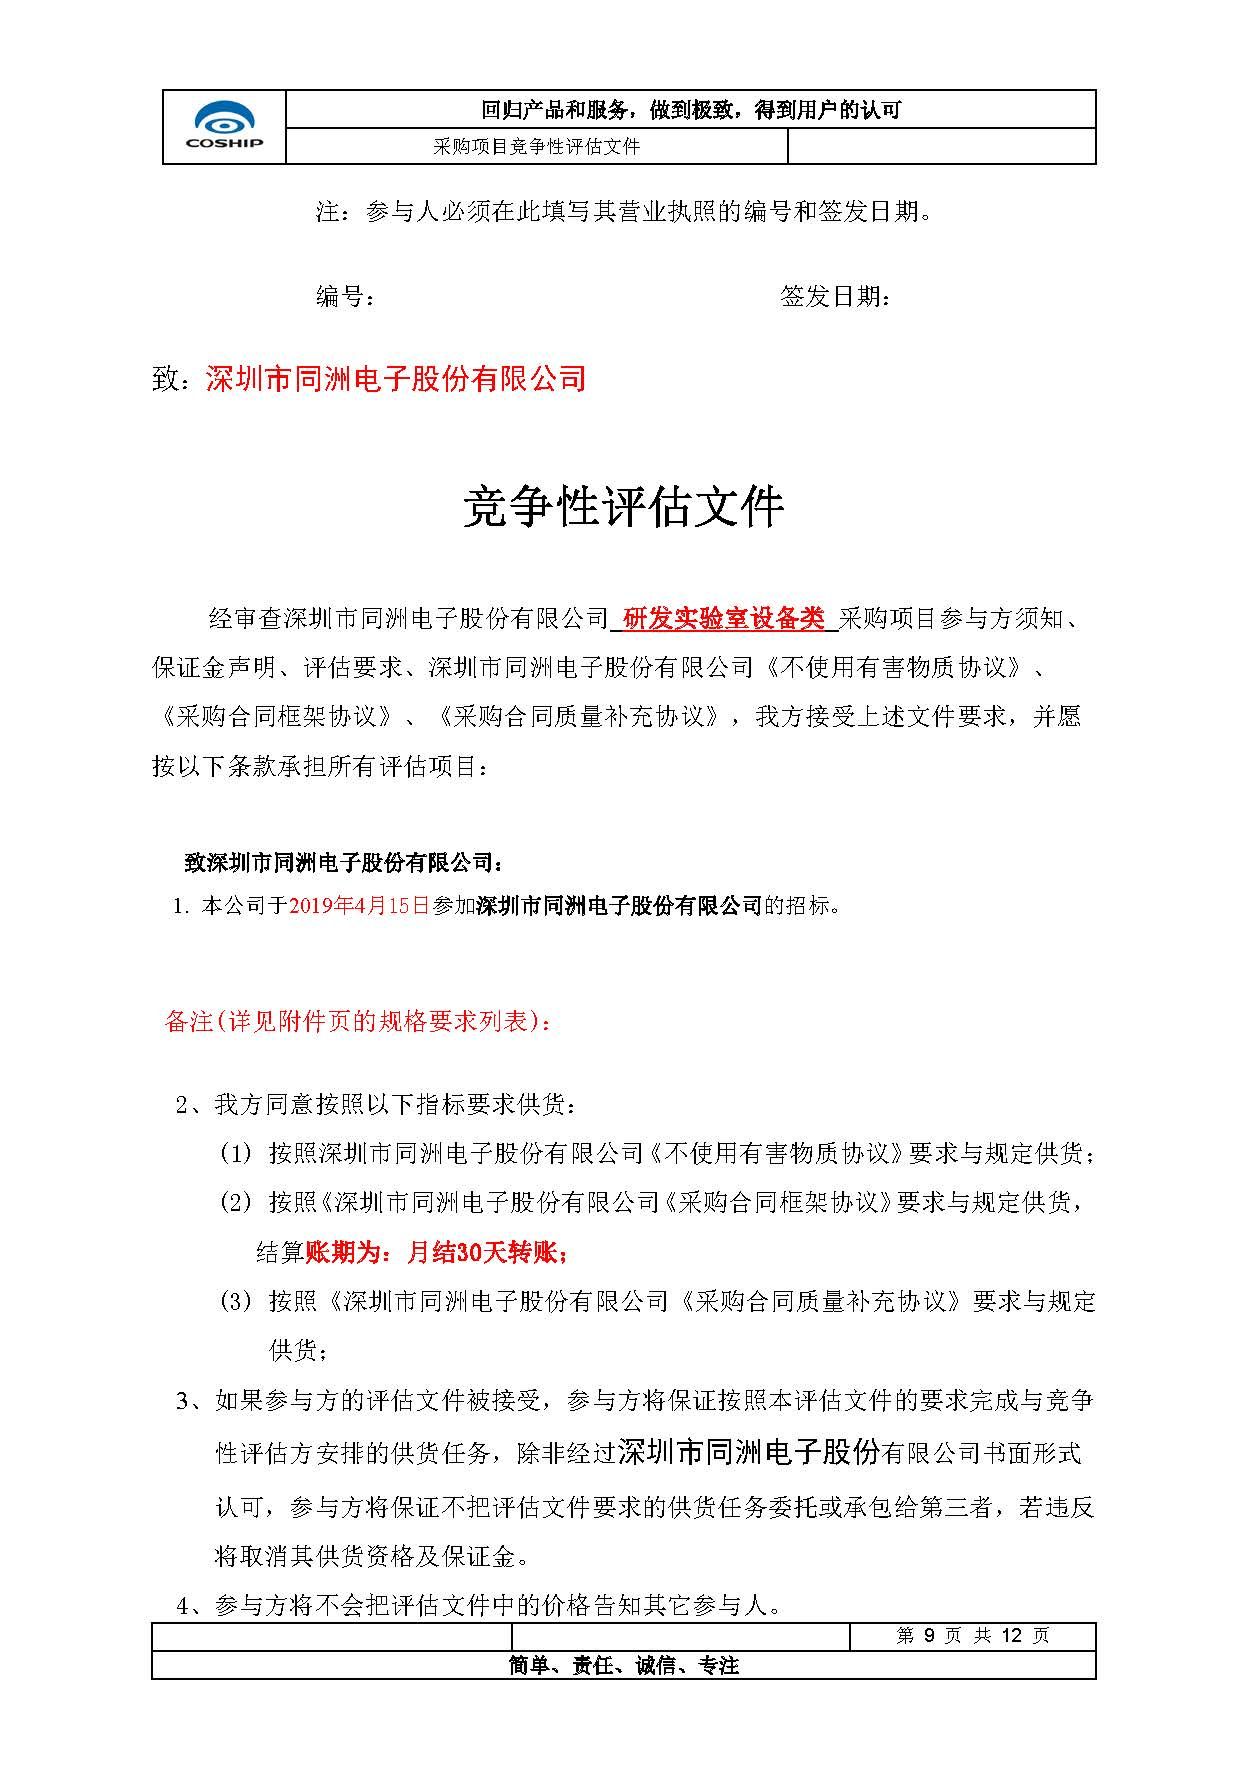 Shenzhen Tongzhou Electronics R&D Laboratory Project Equipment Procurement Bidding Announcement (First Batch)